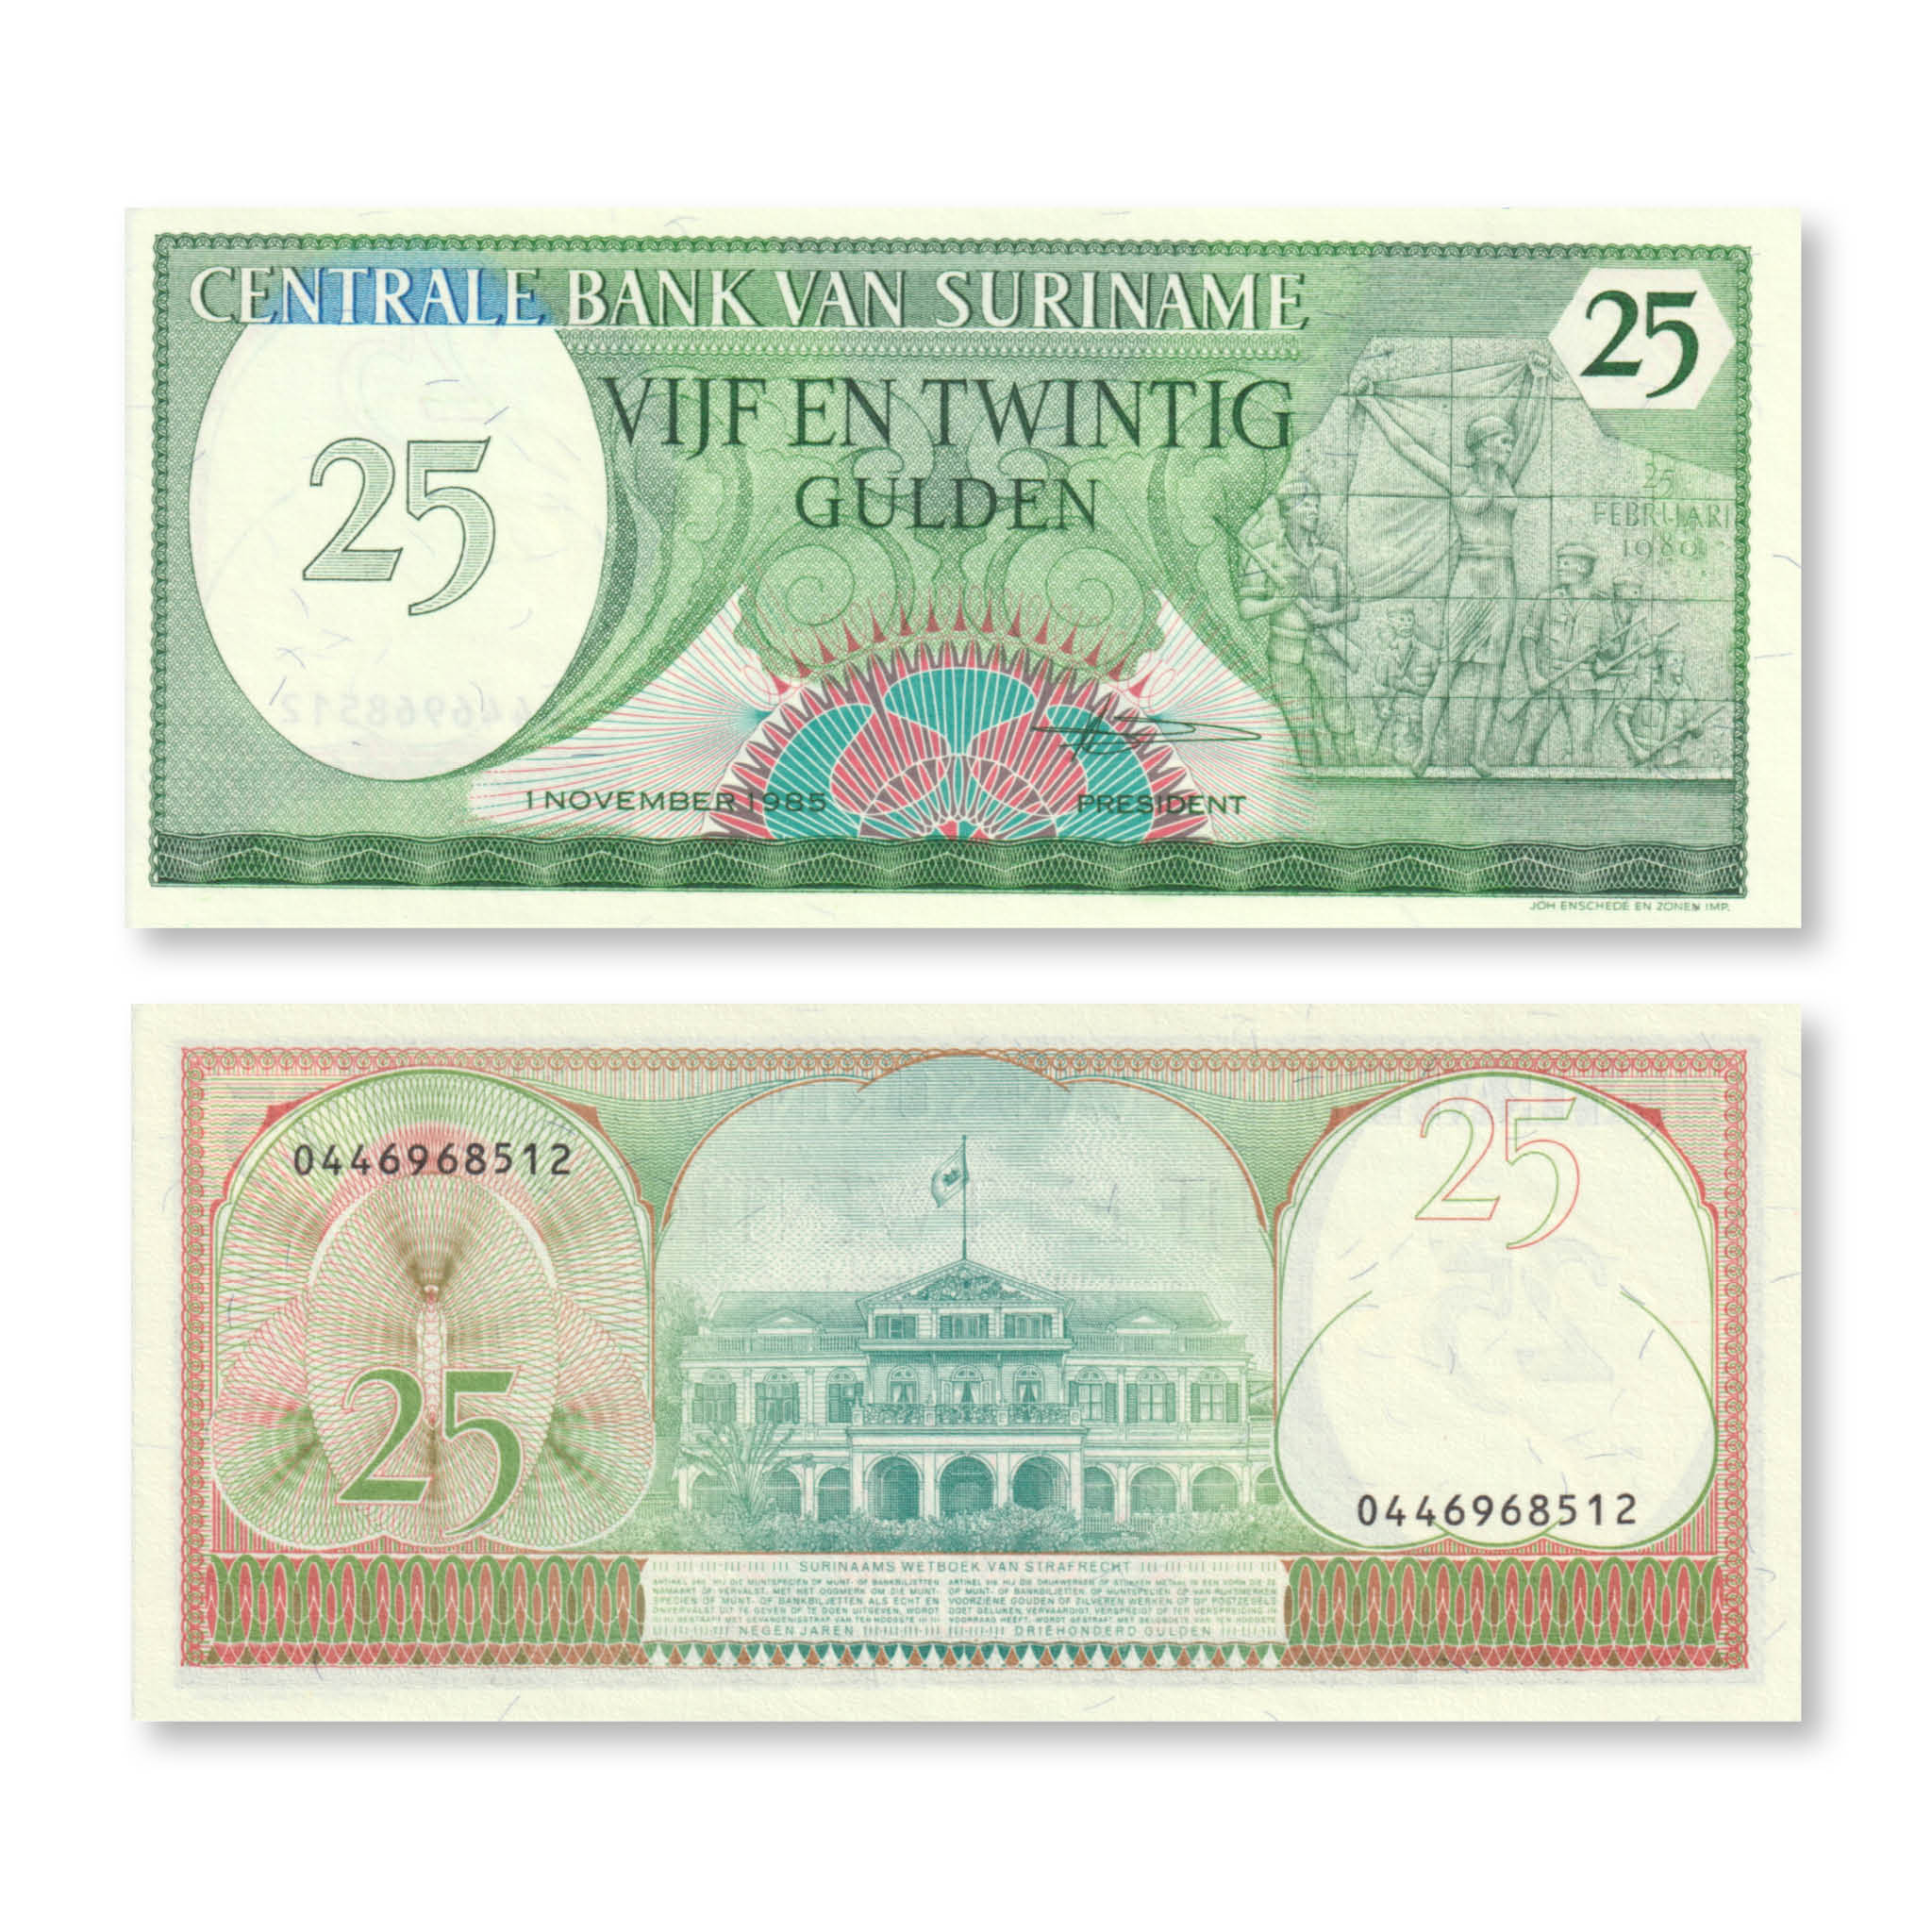 Suriname 25 Gulden, 1985, B513b, P127b, UNC - Robert's World Money - World Banknotes